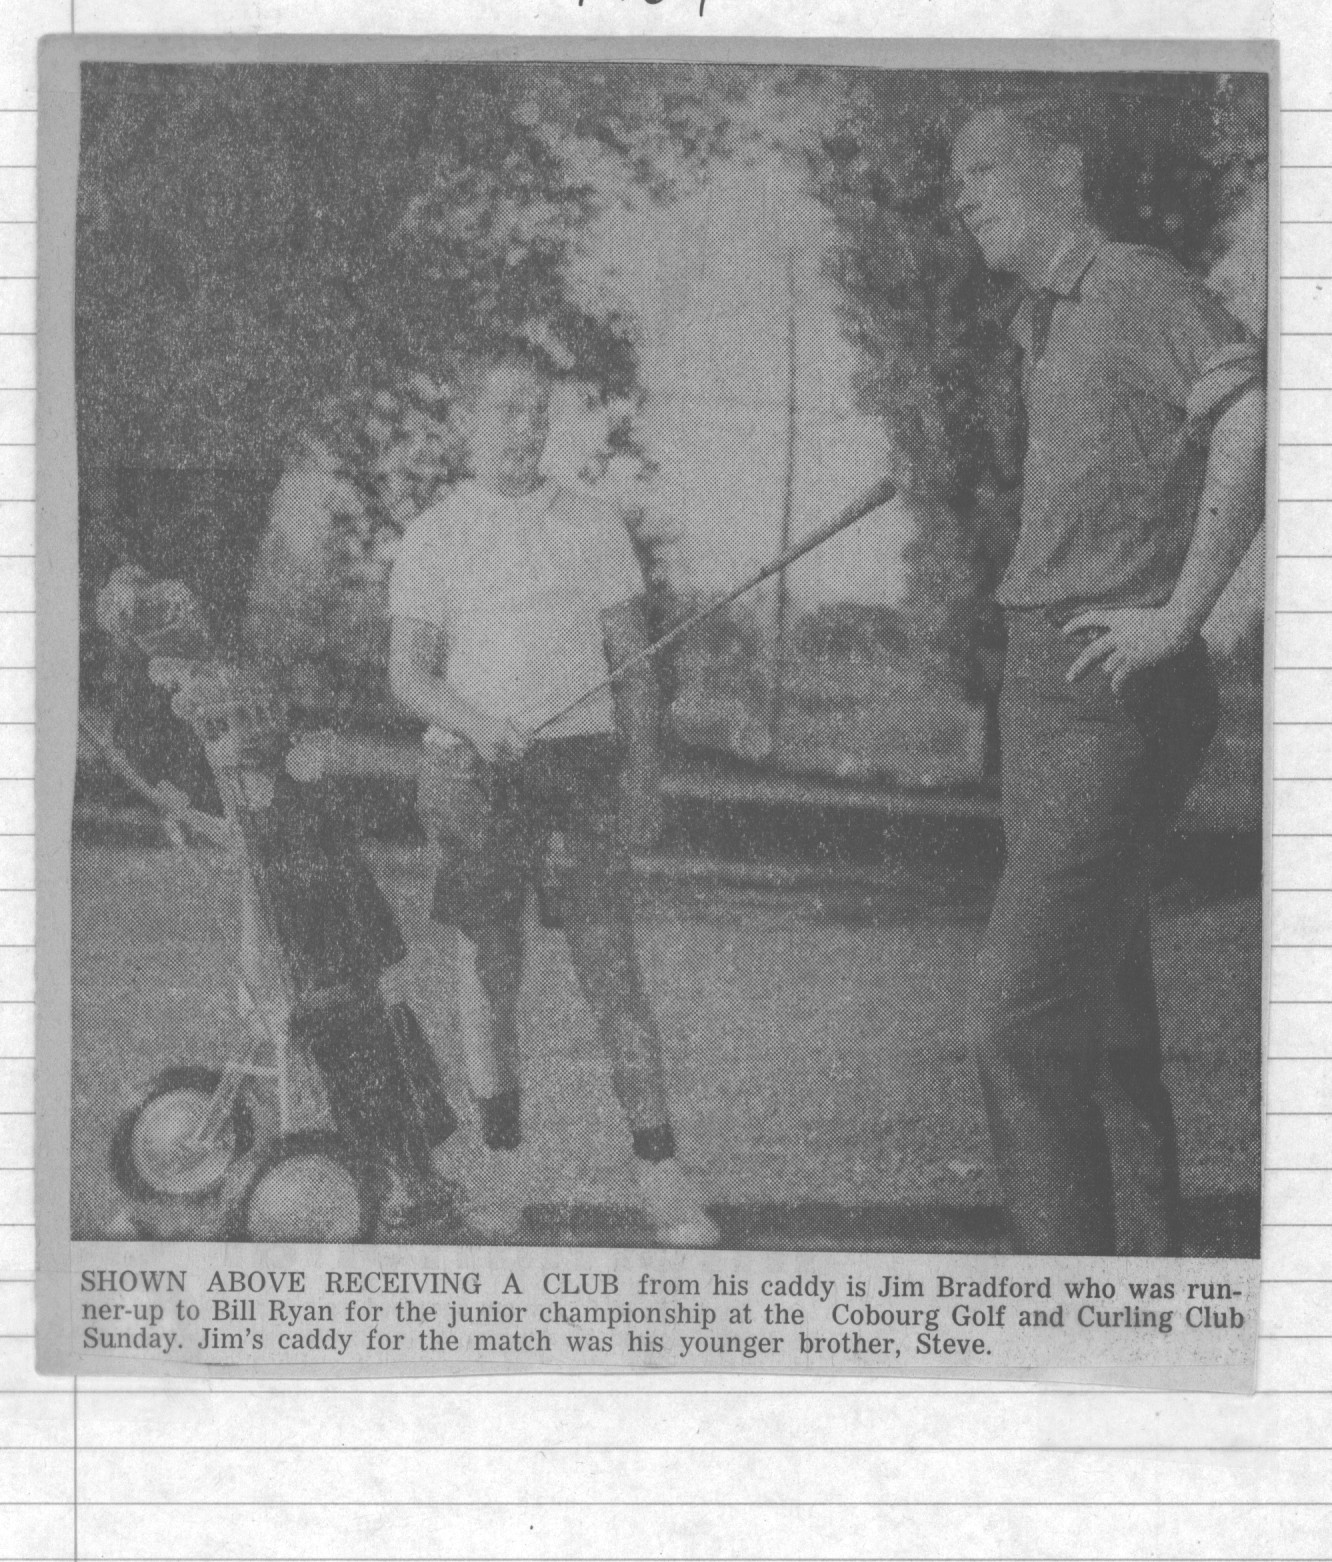 1964-08-25 Golf -Jim Bradford w-caddy Steve